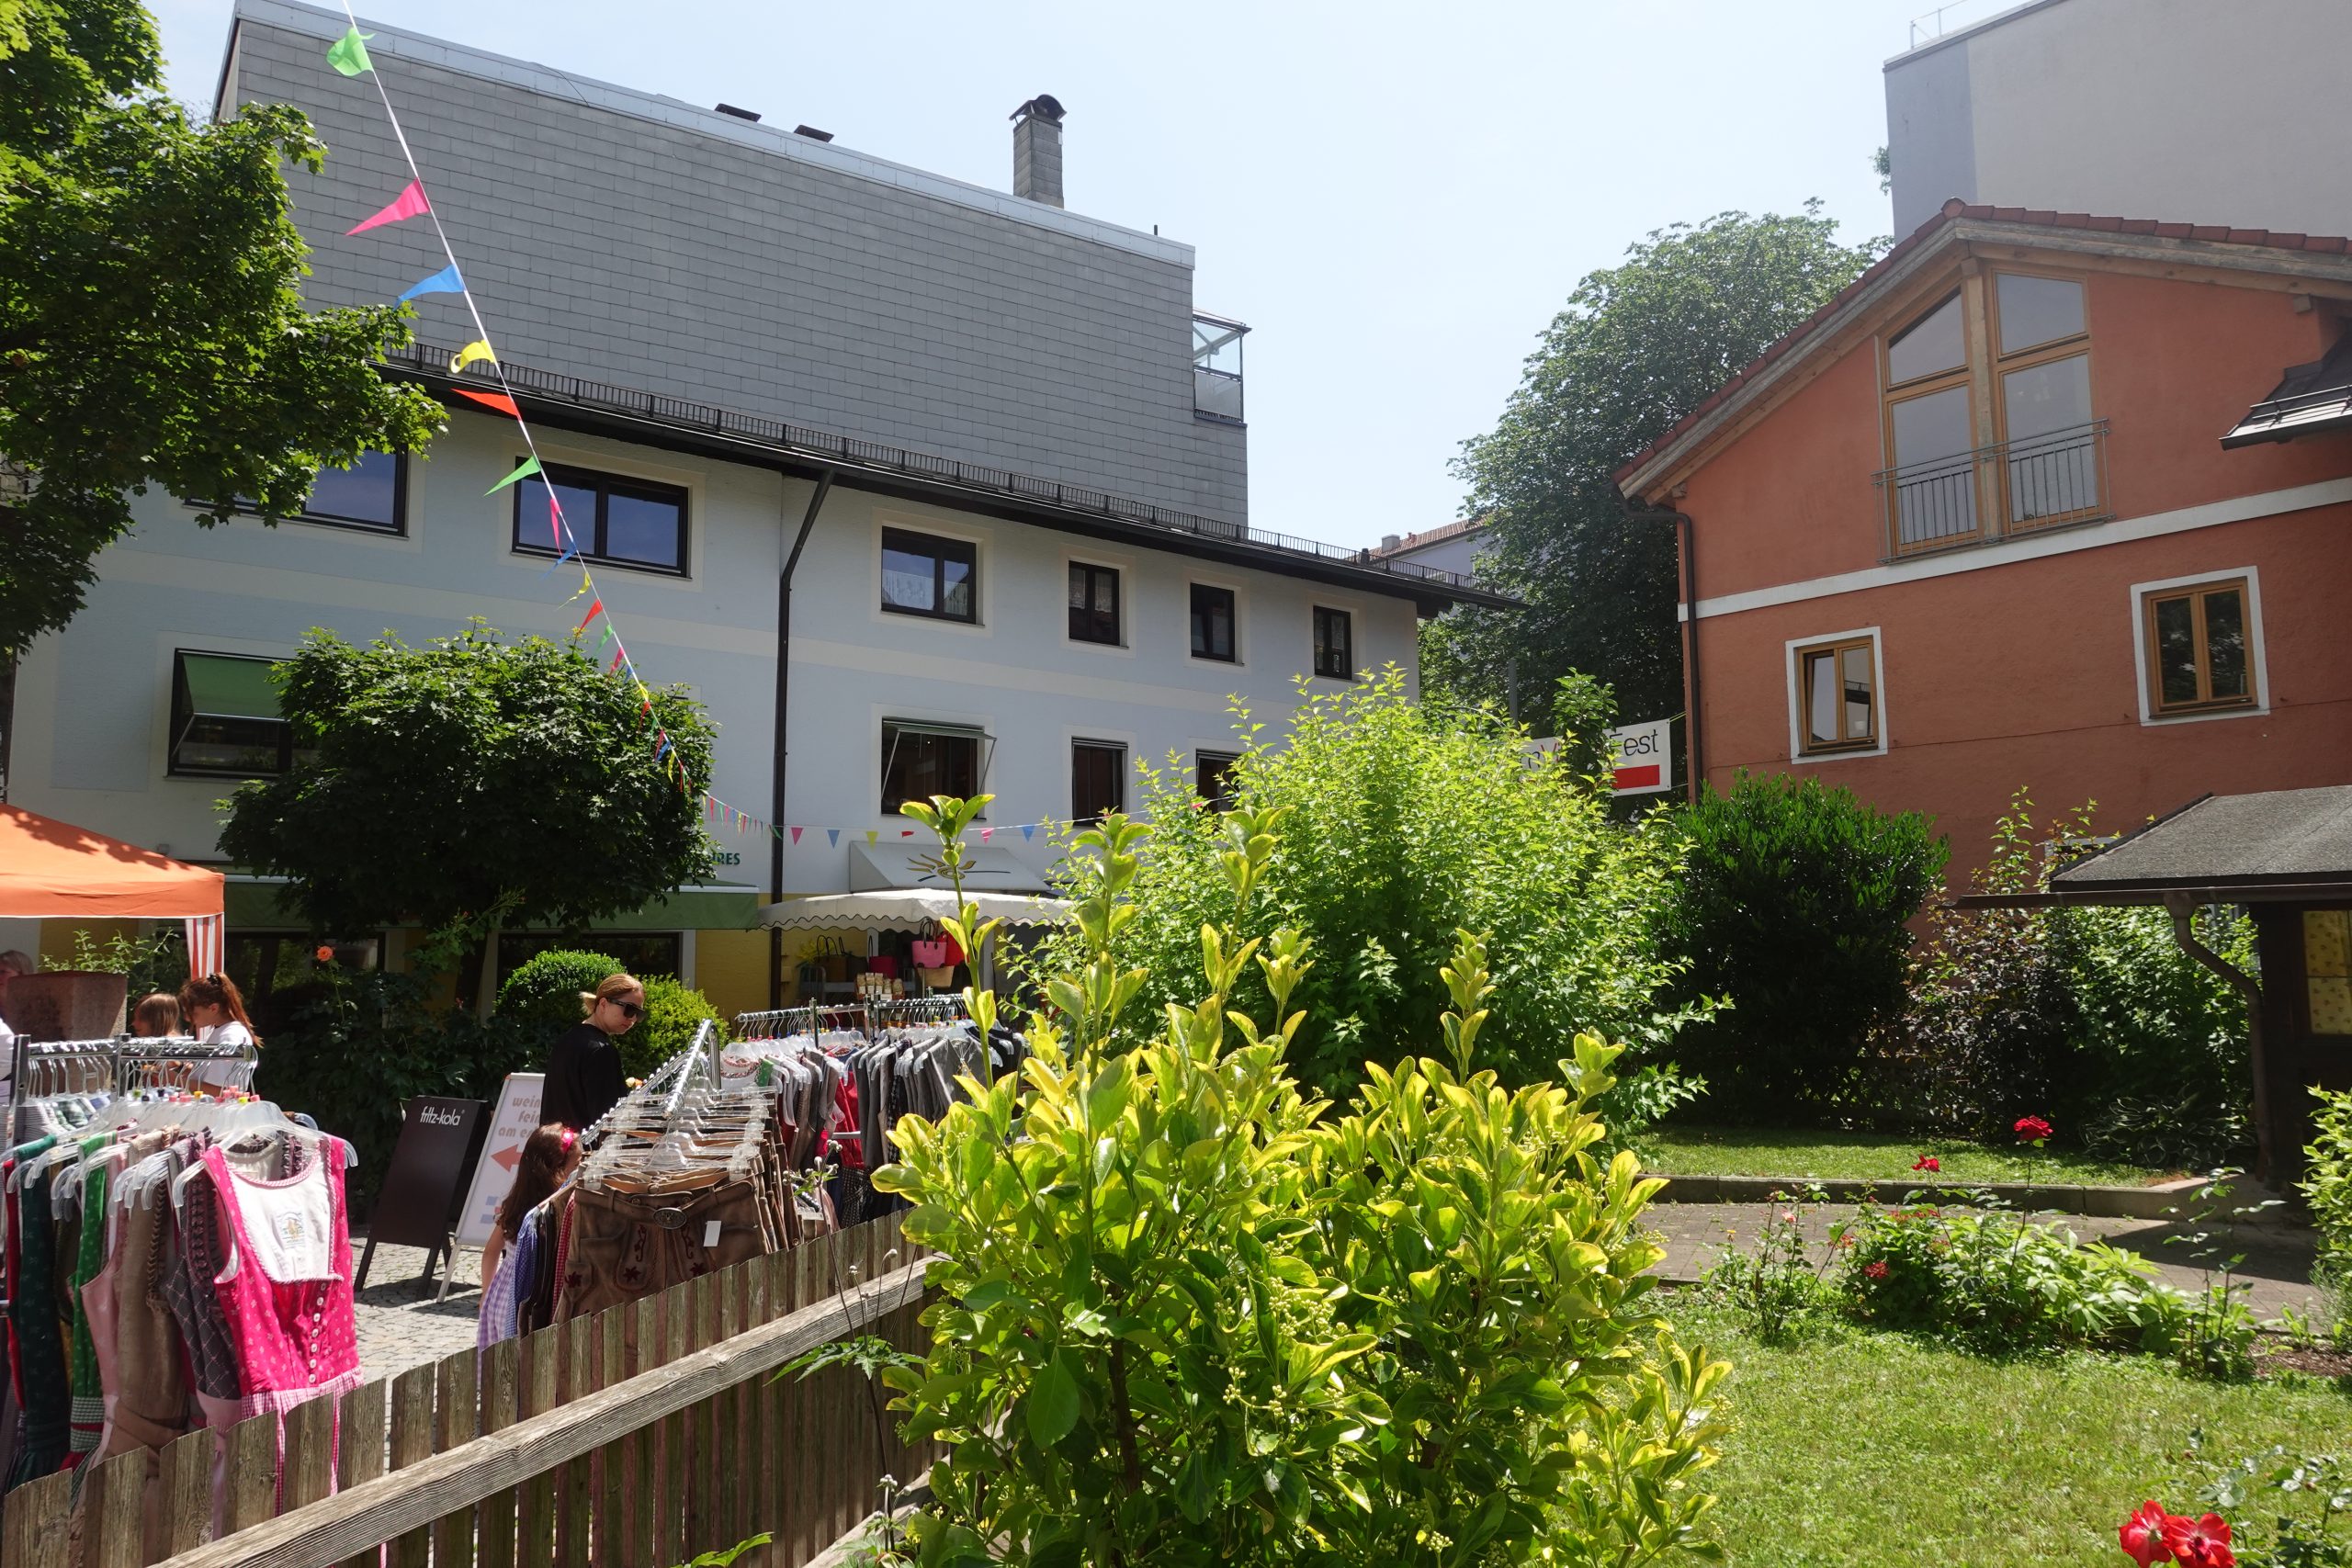 Esbaumfest in Rosenheim. Foto: Innpuls.me